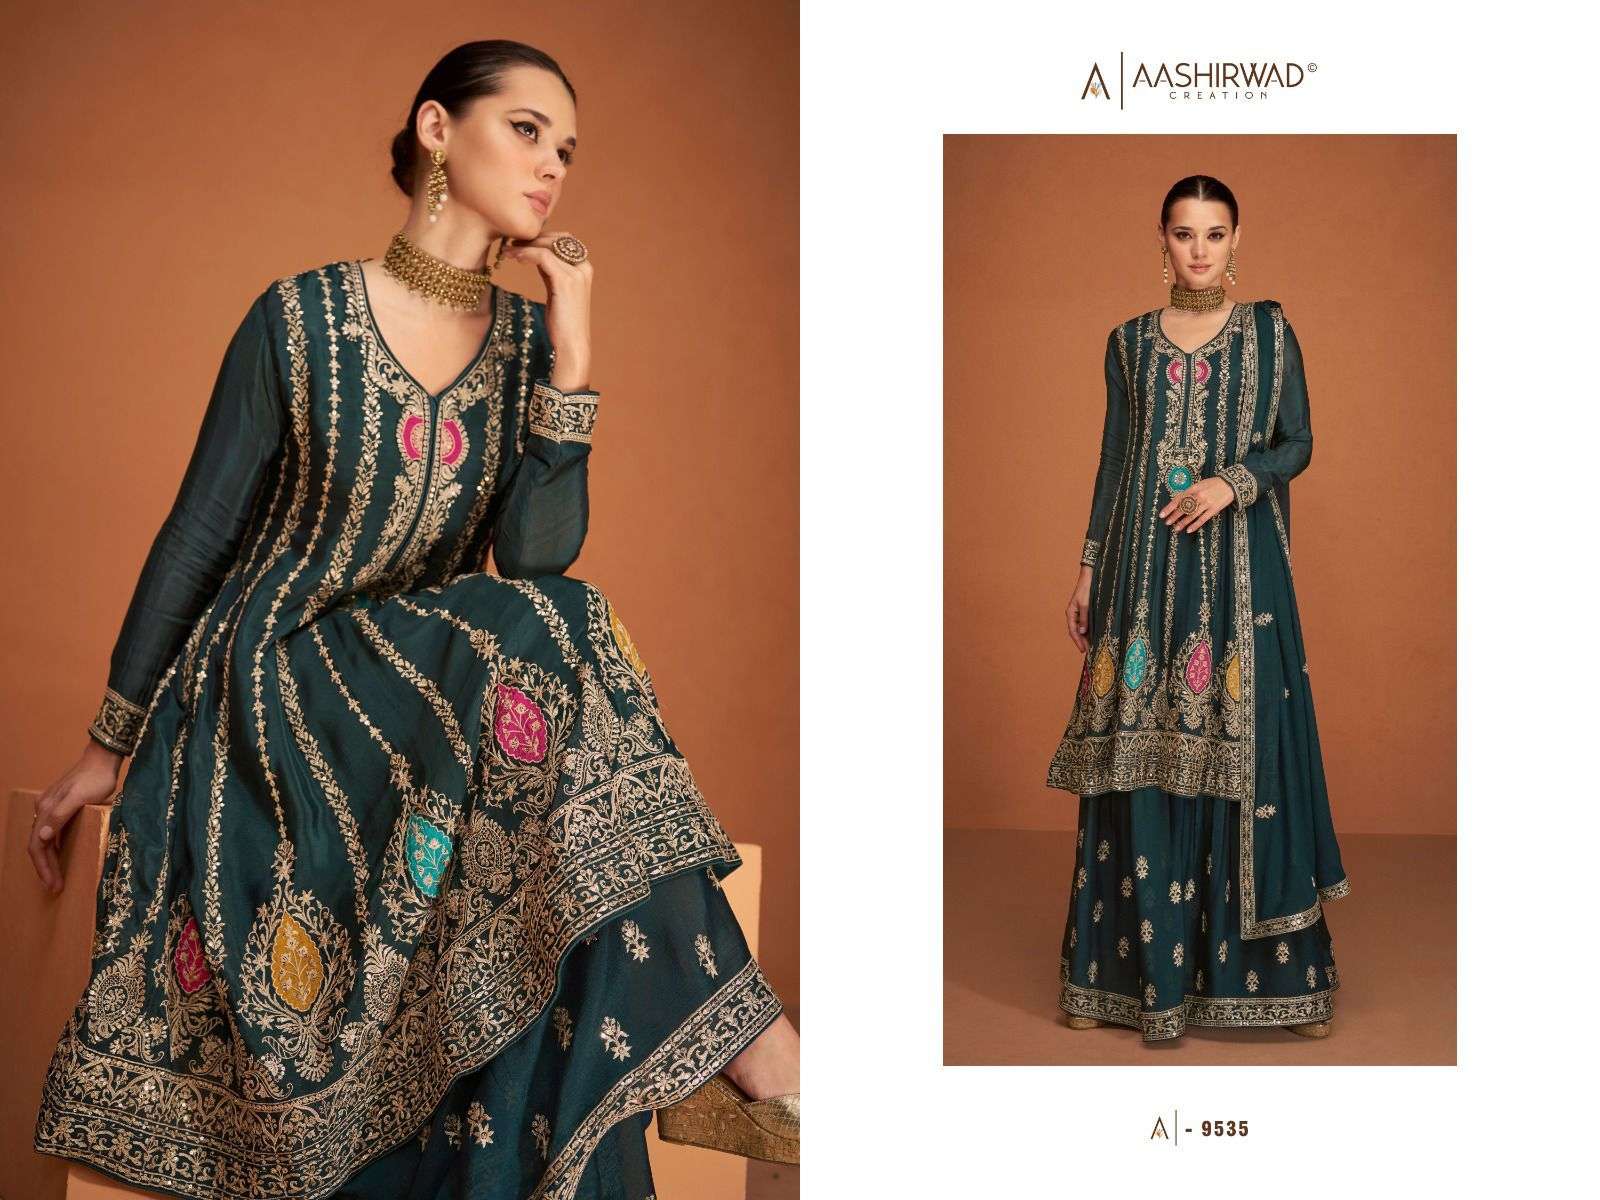 aashirwad creation soha 9533-9537 series function special dress catalogue online dealer surat